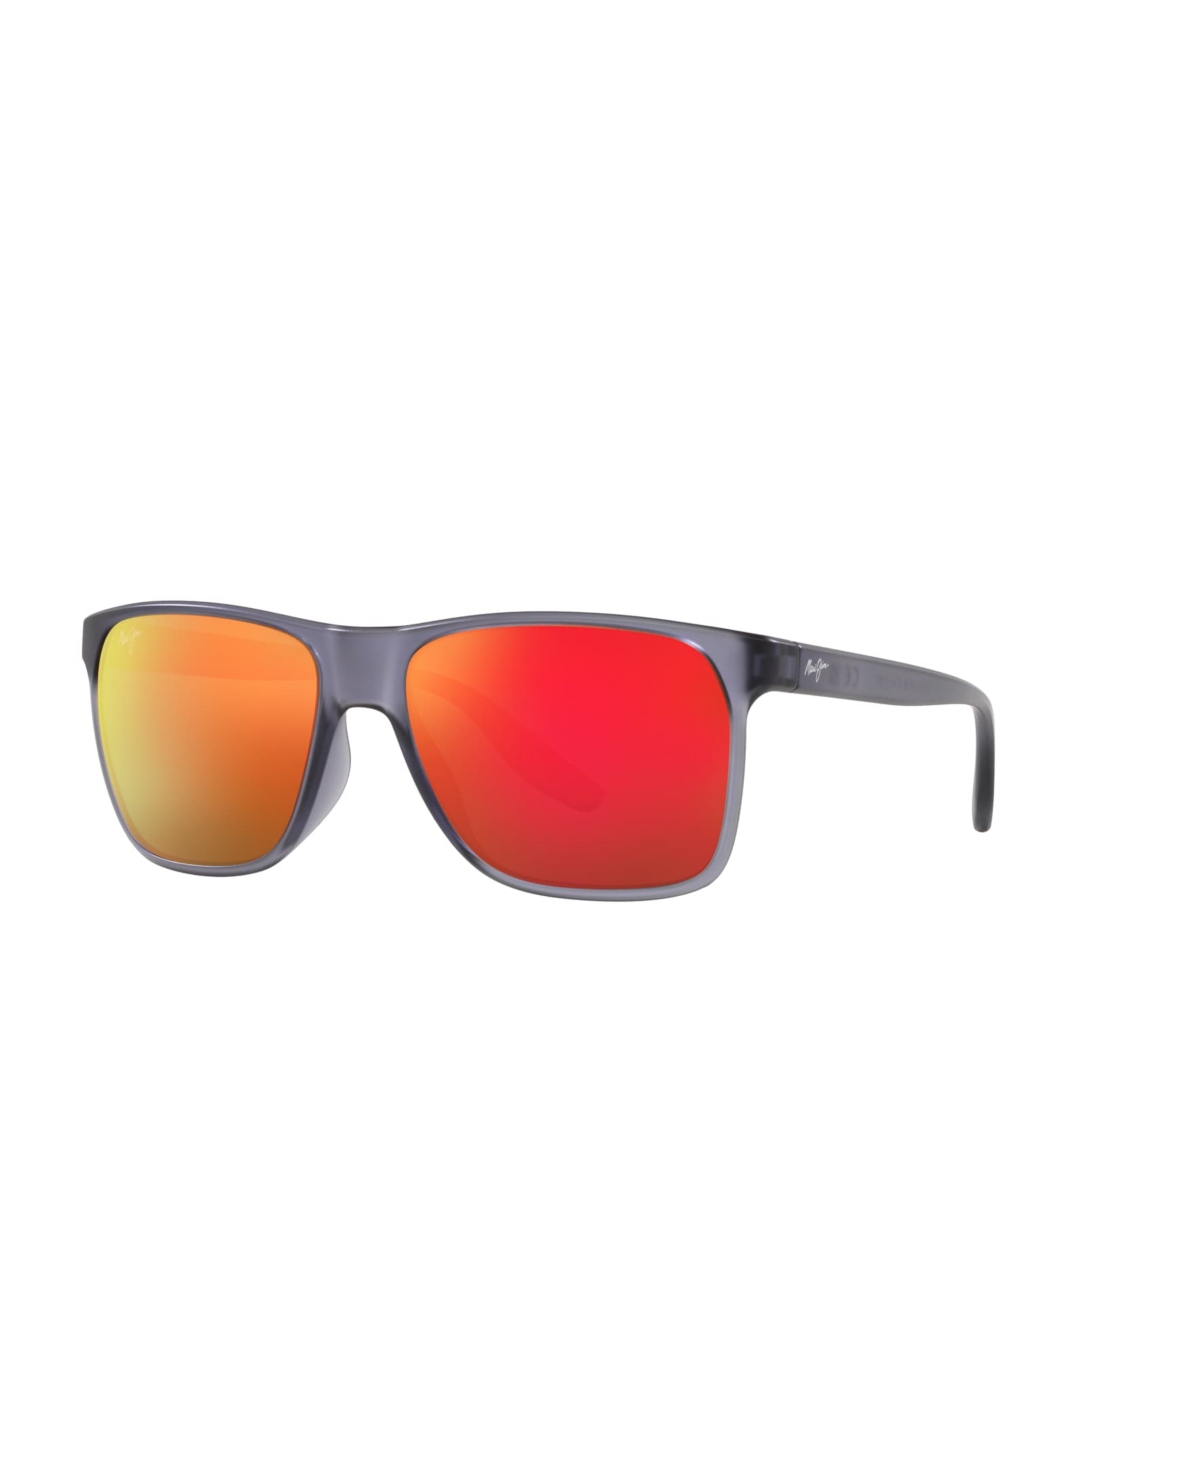 Maui Jim Men's Polarized Sunglasses, Pailolo Mj000692 In Gray